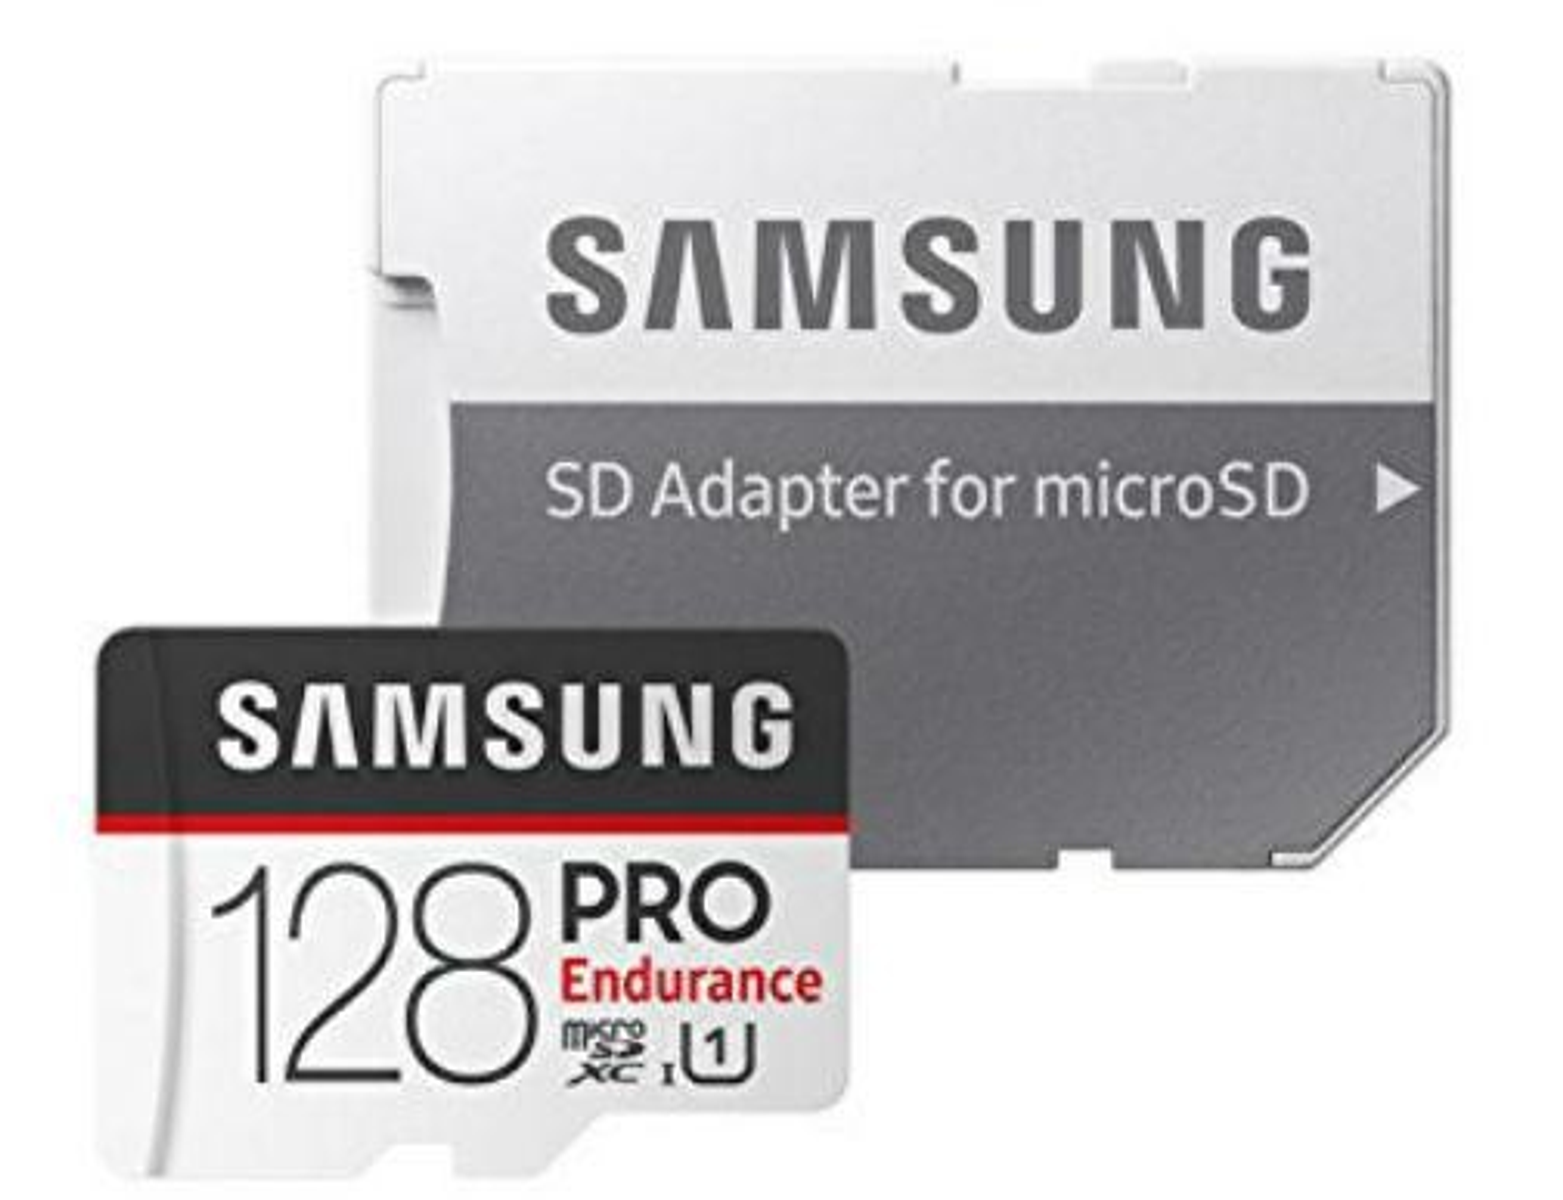 100 ENDURANCE MB-MJ128GA/EU SAMSUNG GB, Micro-SDHC 128GB, Speicherkarte, PRO MB/s 128